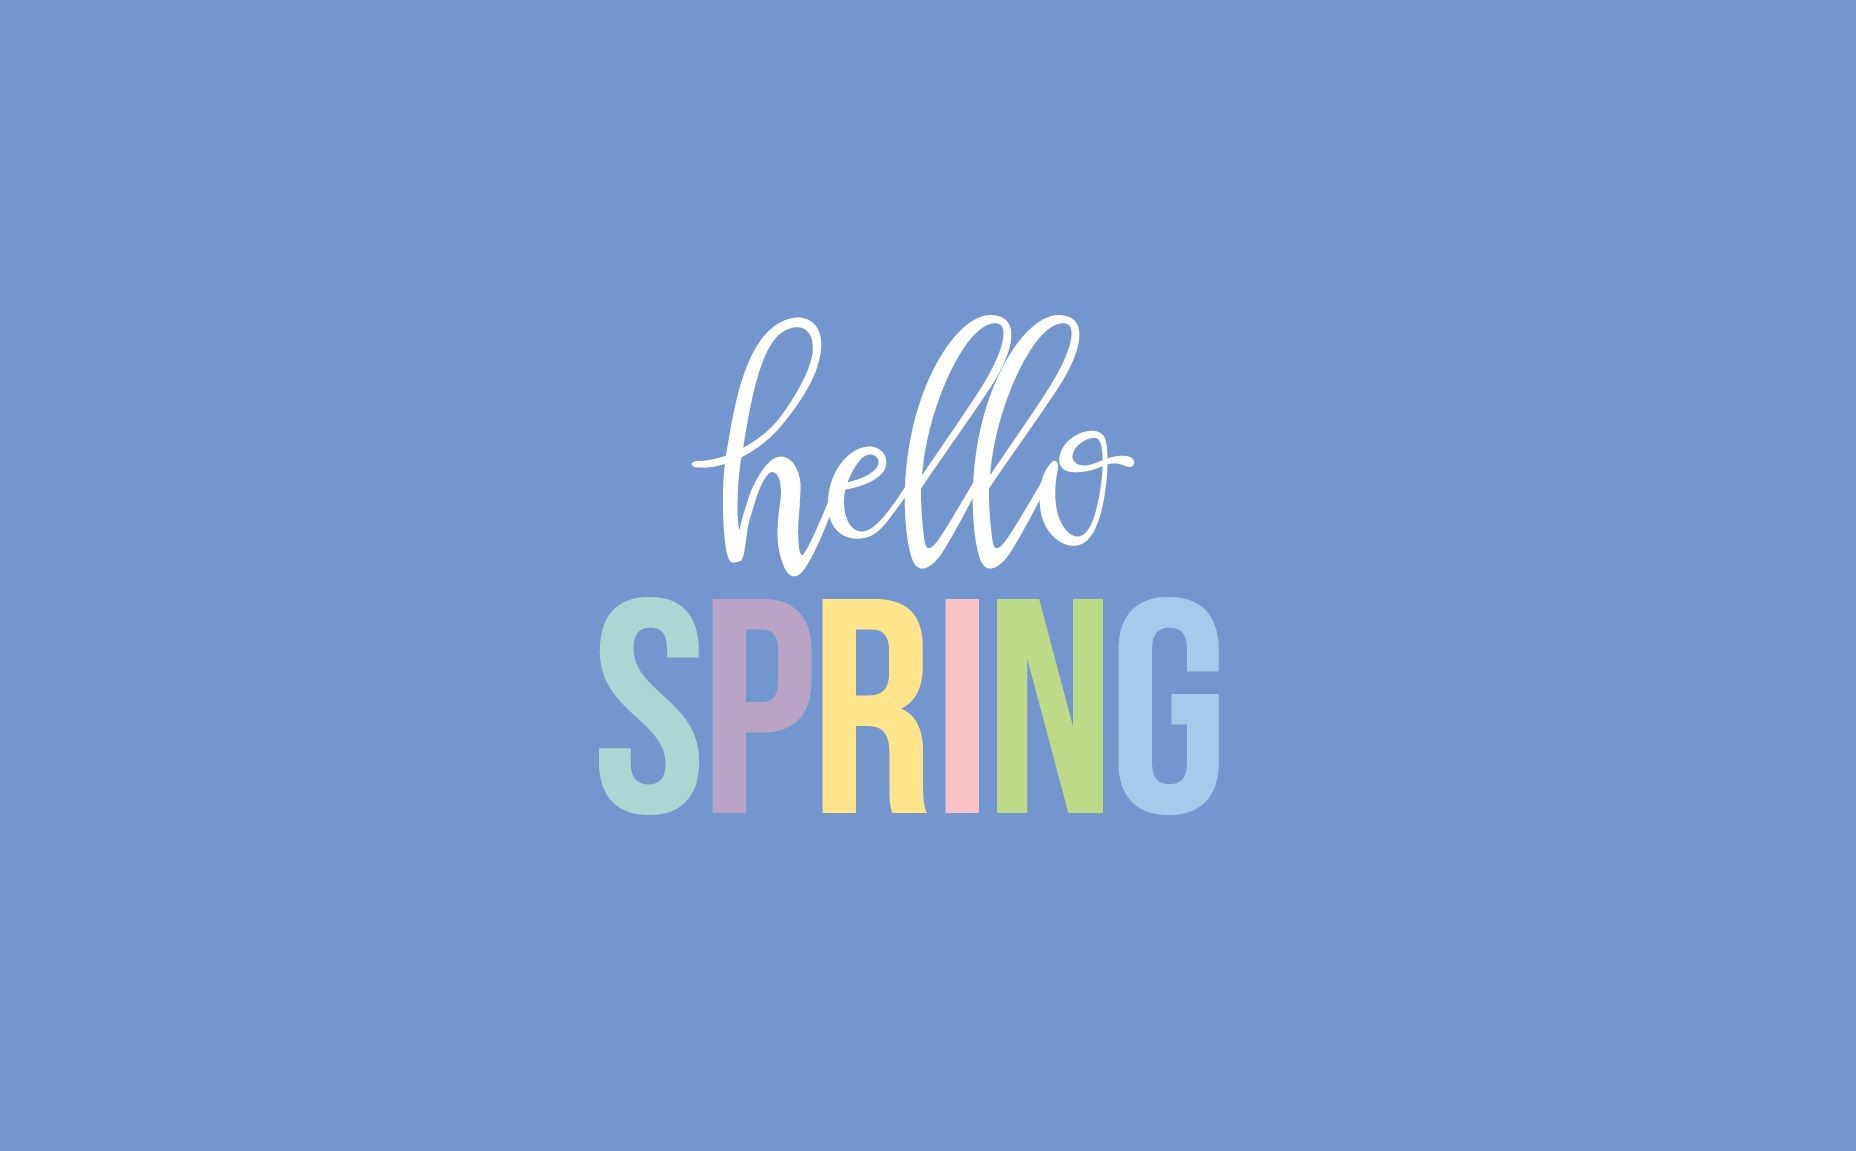 Hello Spring Desktop Wallpaper. Spring desktop wallpaper, Hello spring wallpaper, Spring wallpaper